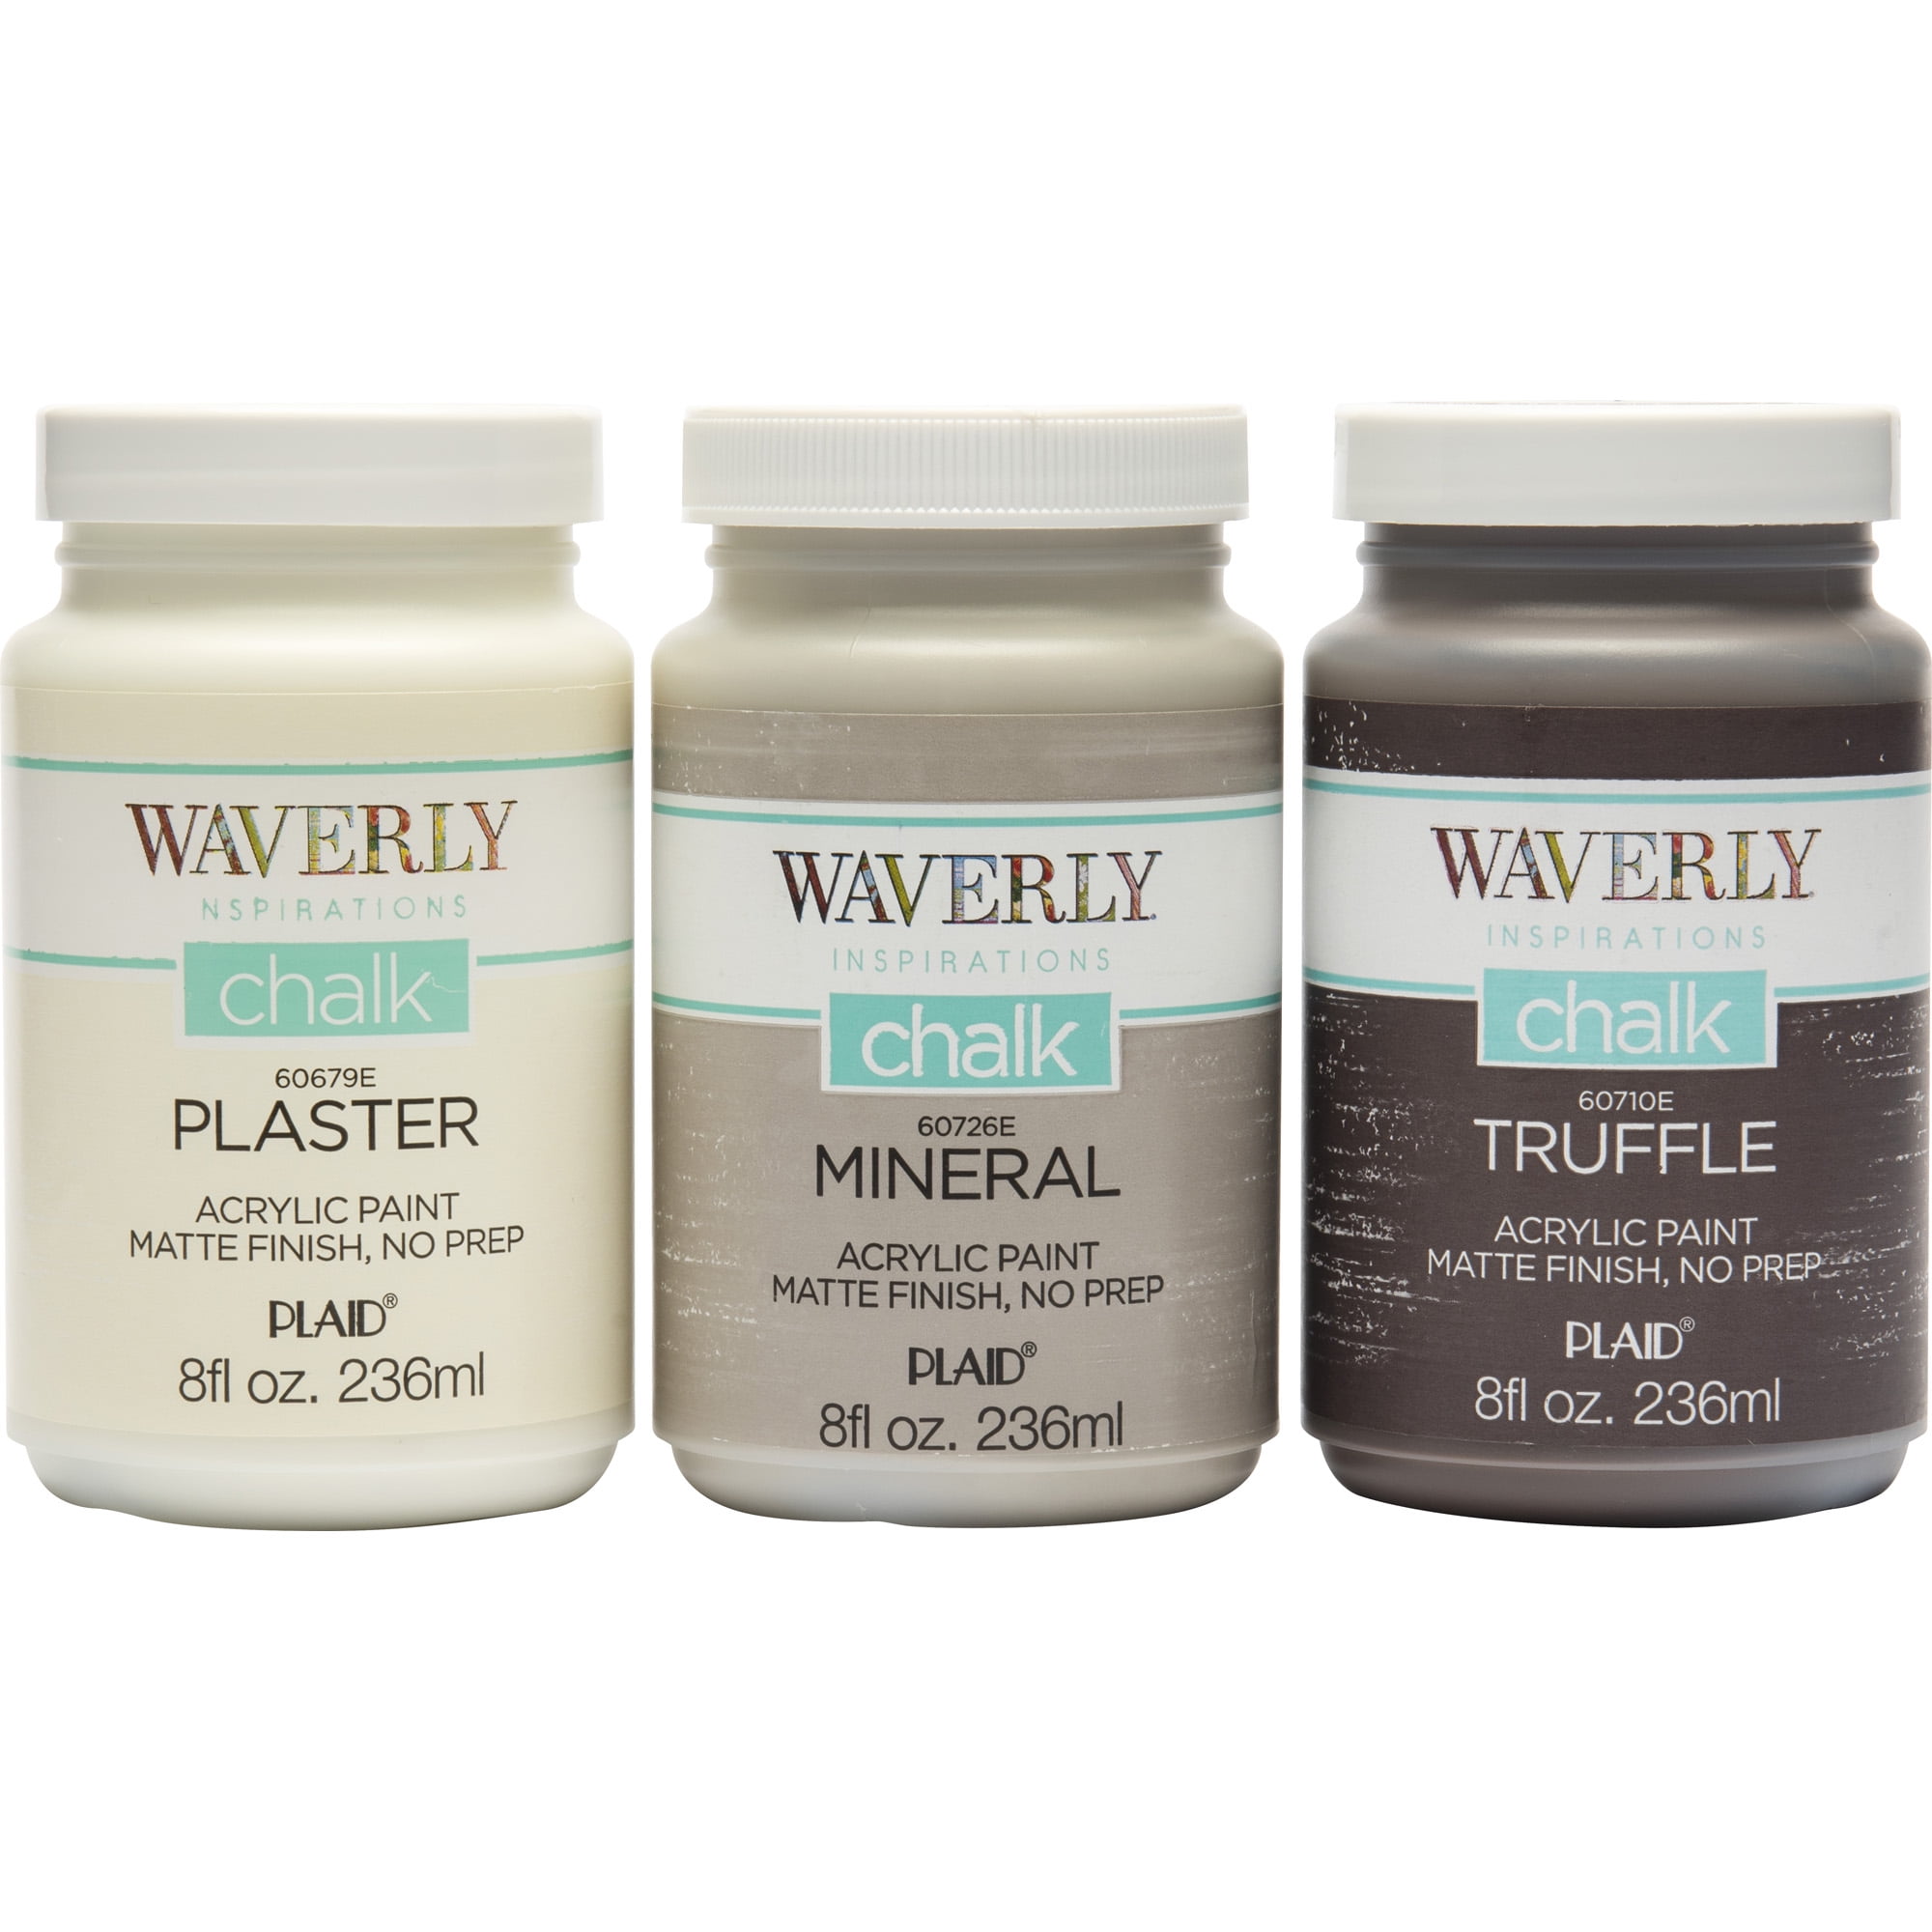 Shop Plaid Waverly ® Inspirations Chalk Acrylic Paint - Truffle, 8